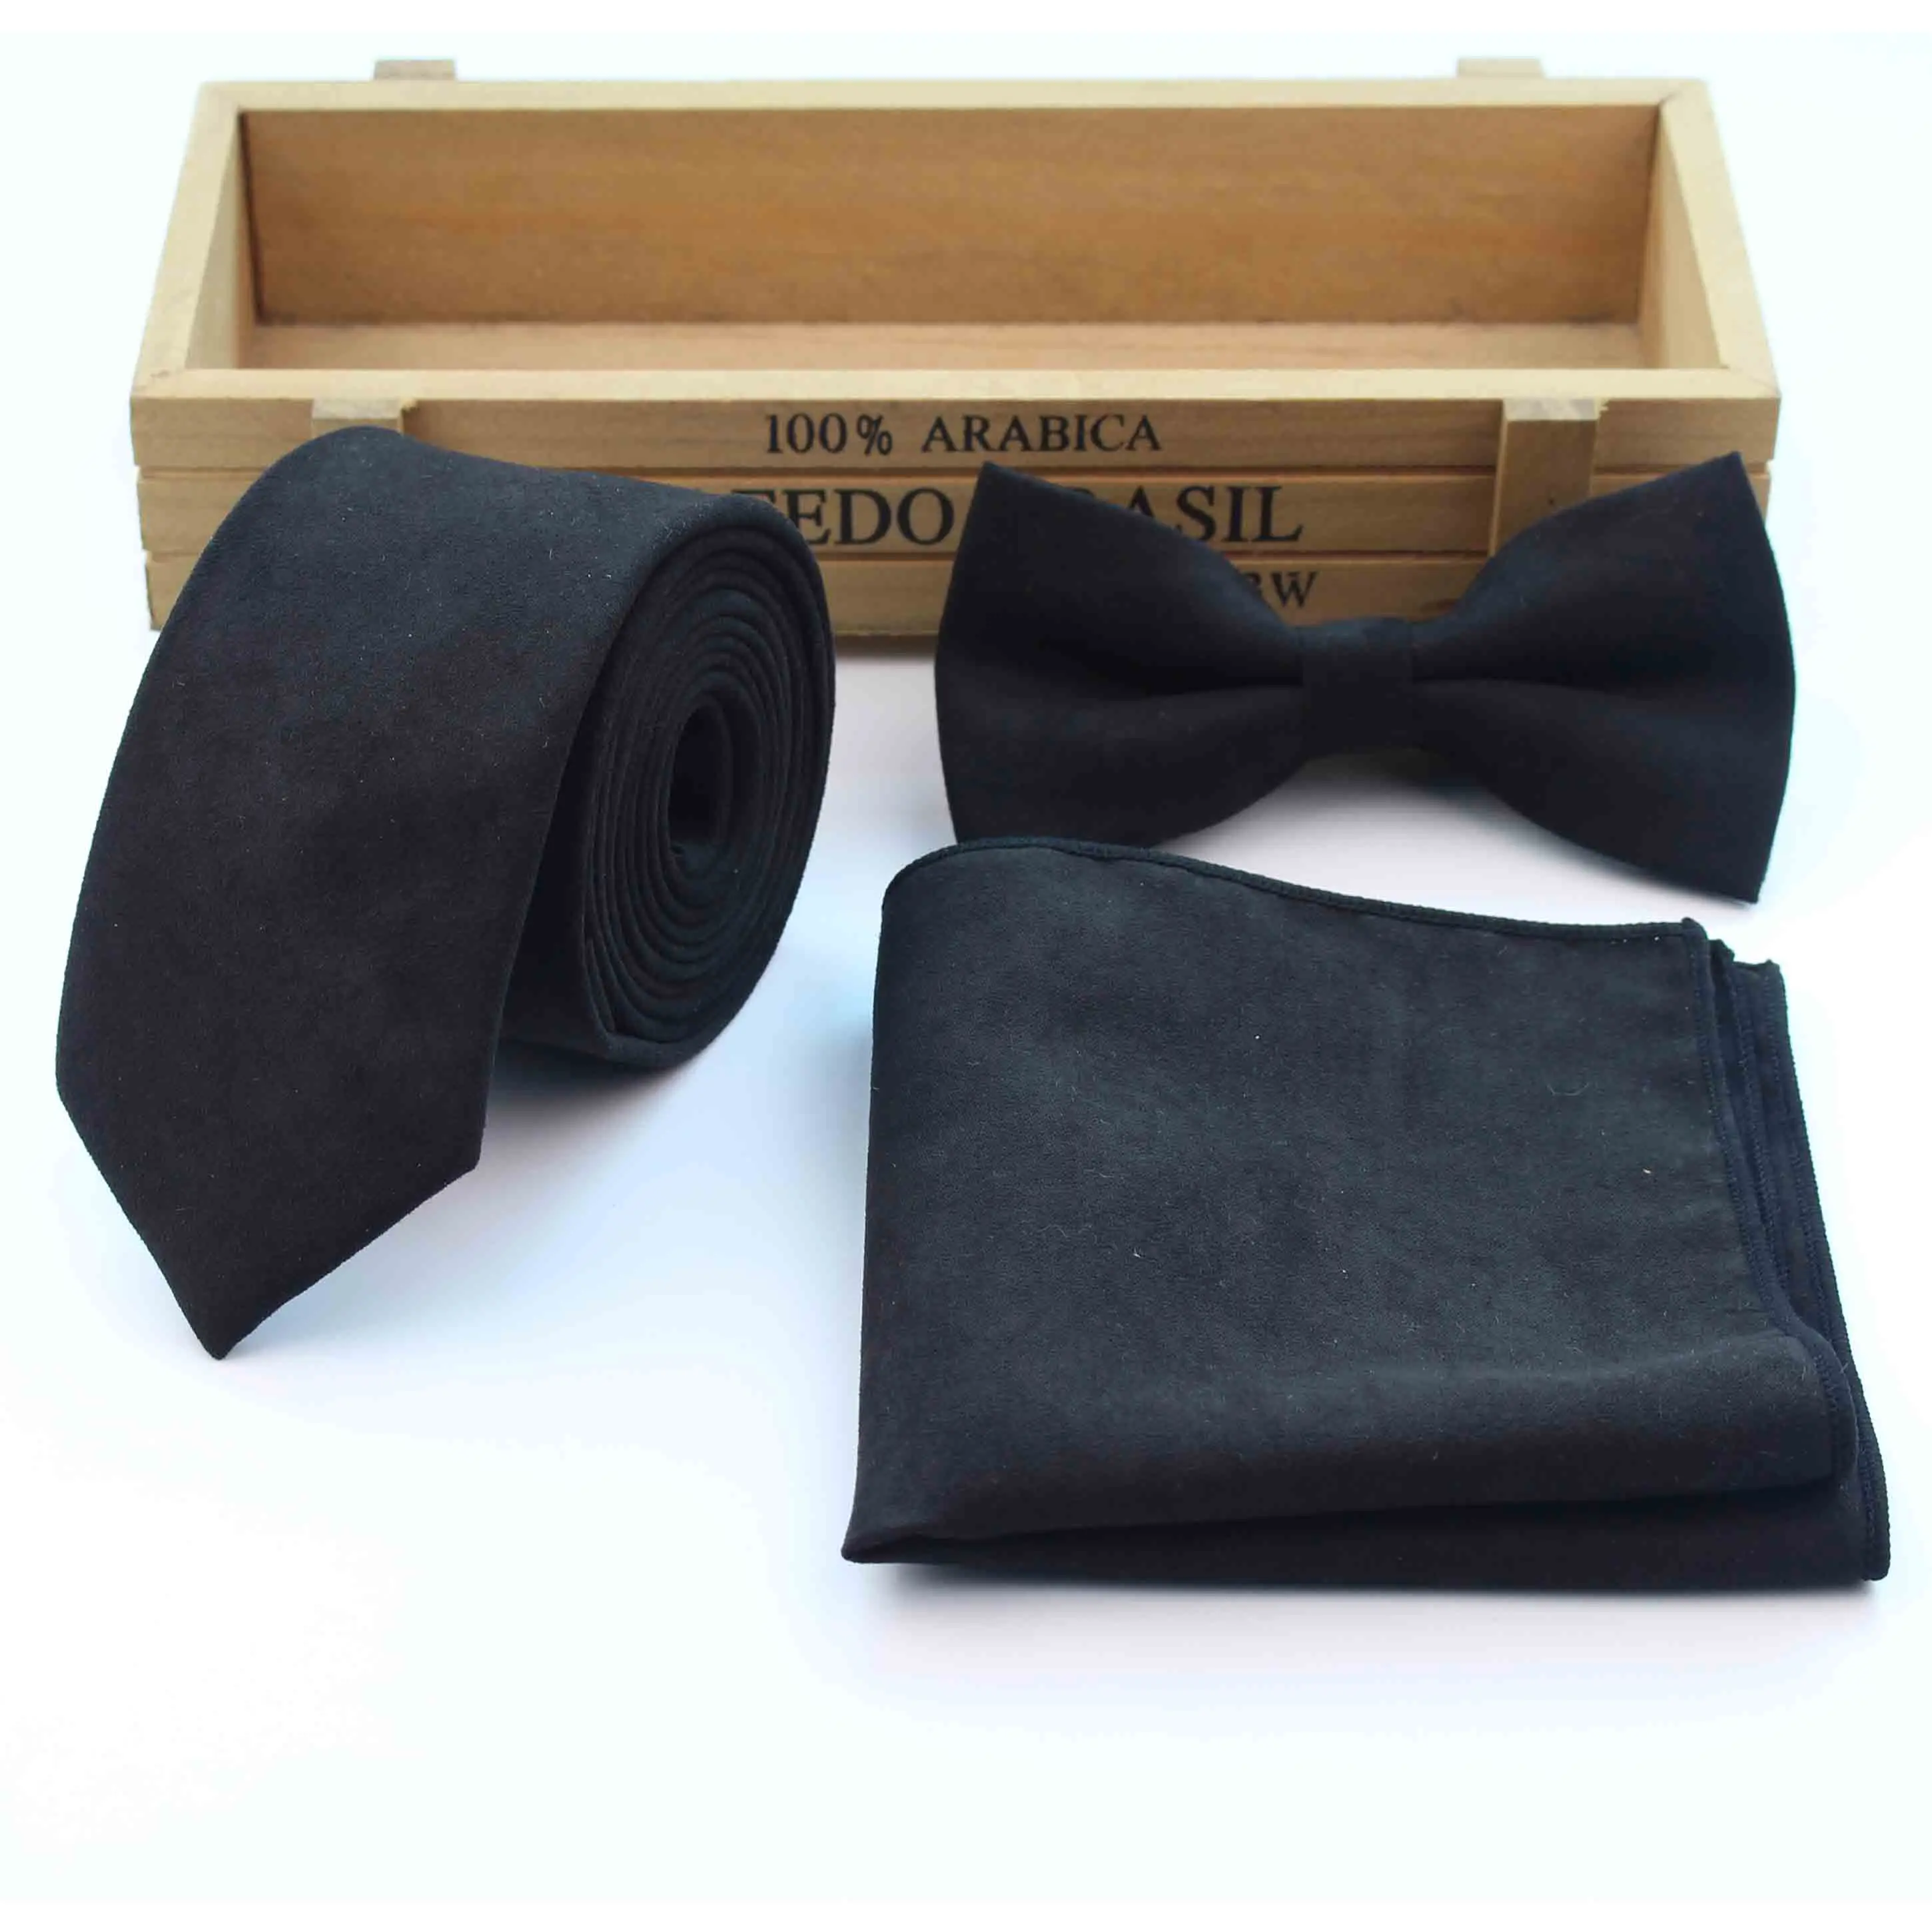 
Mens Designer Skinny Solid Color Micro Suede Pocket Square Handkerchief Butterfly Bow Tie Ties Set Lots 